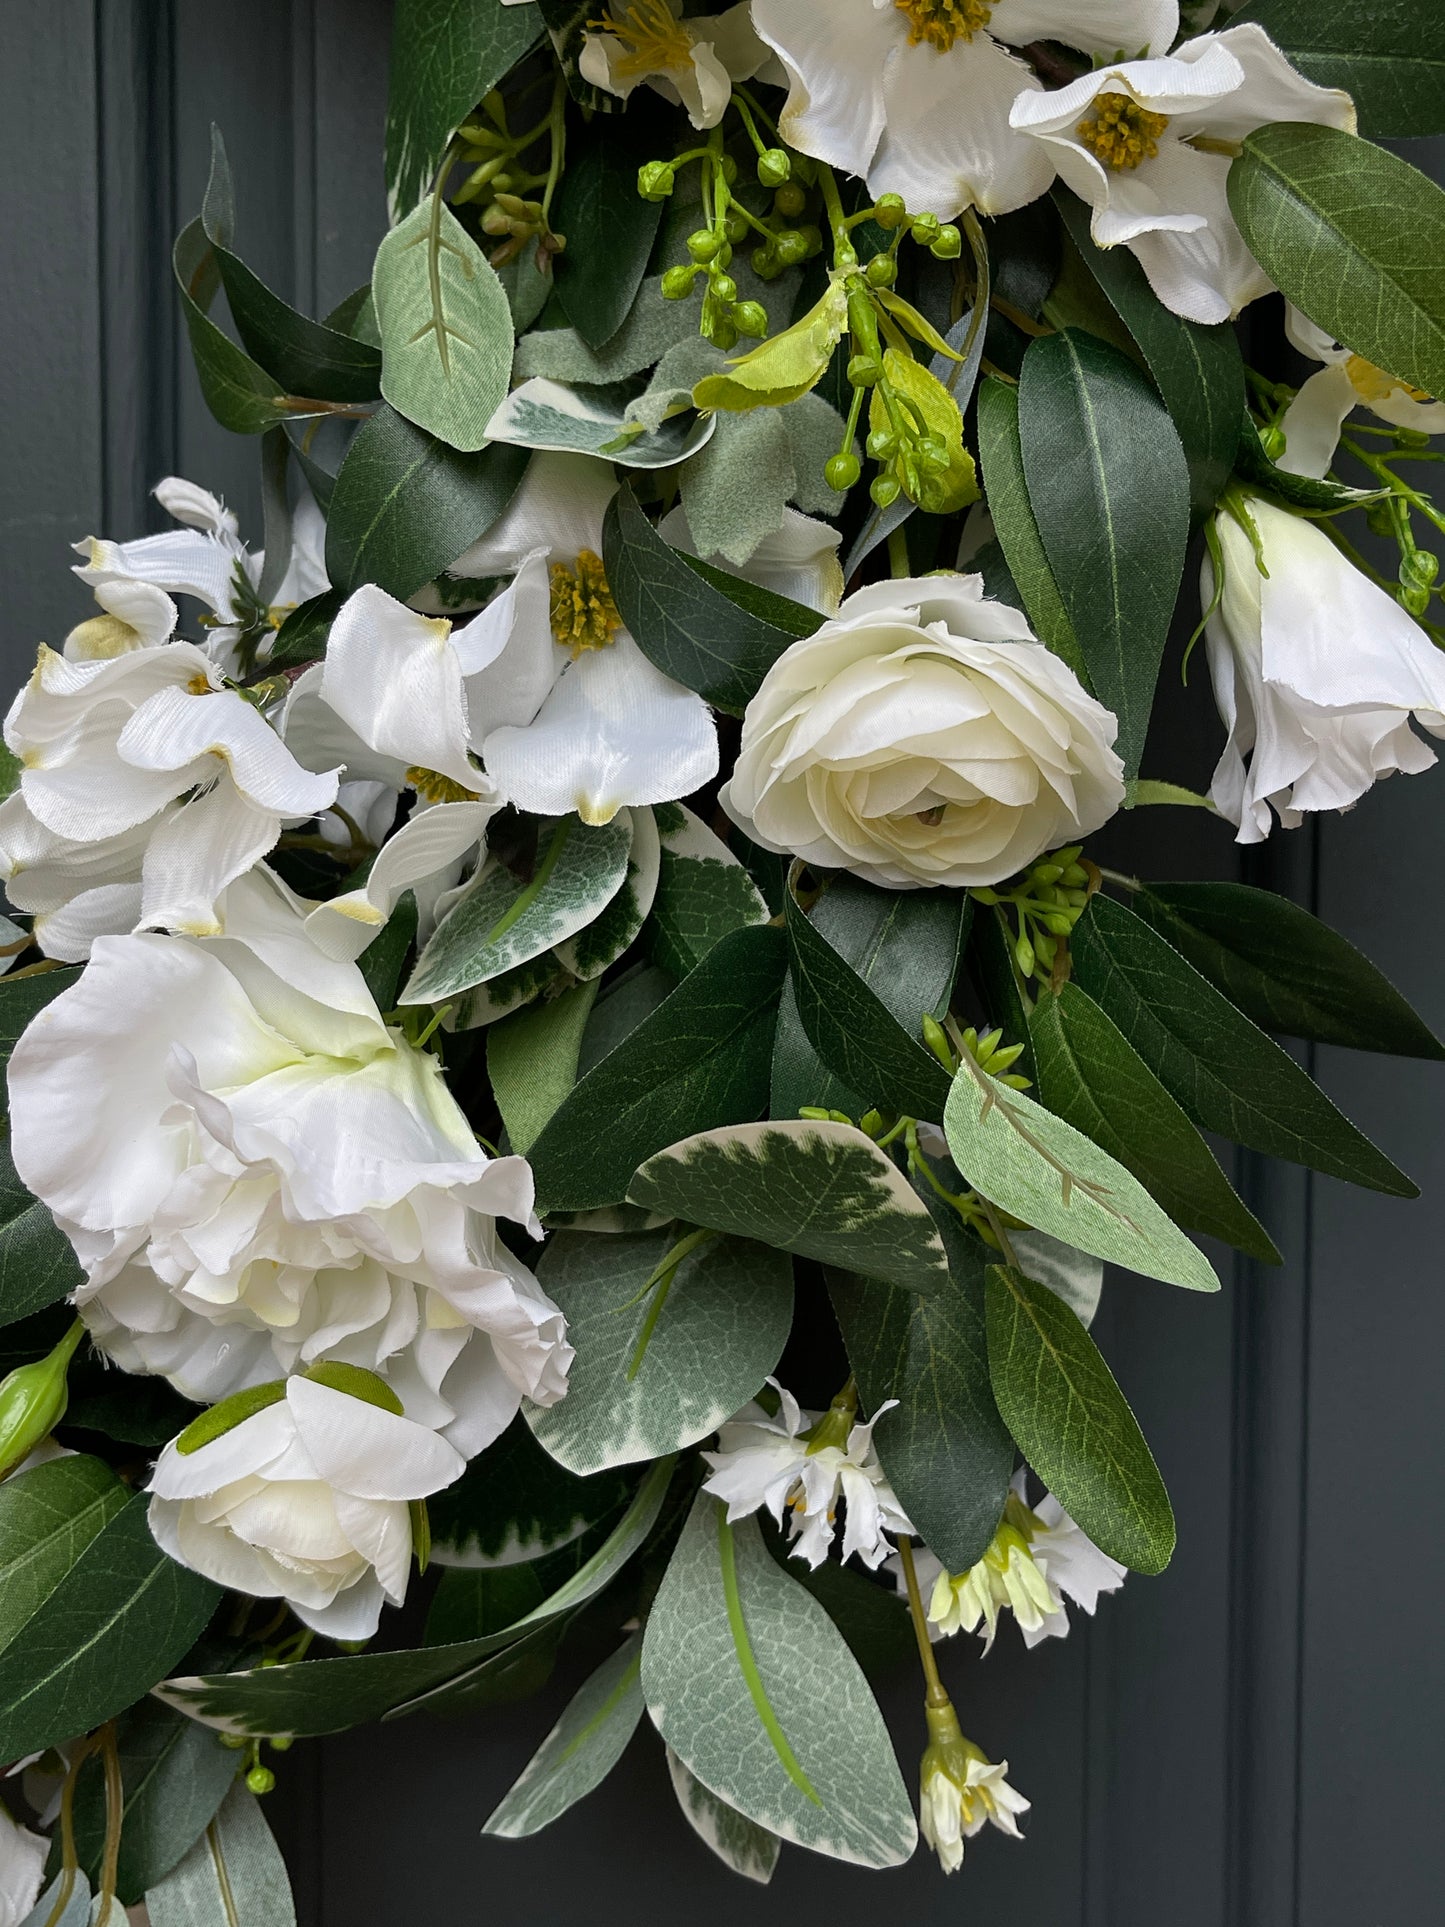 White & Green Dogwood, Ranunculus, and Eucalyptus Front Door Spring Wreath